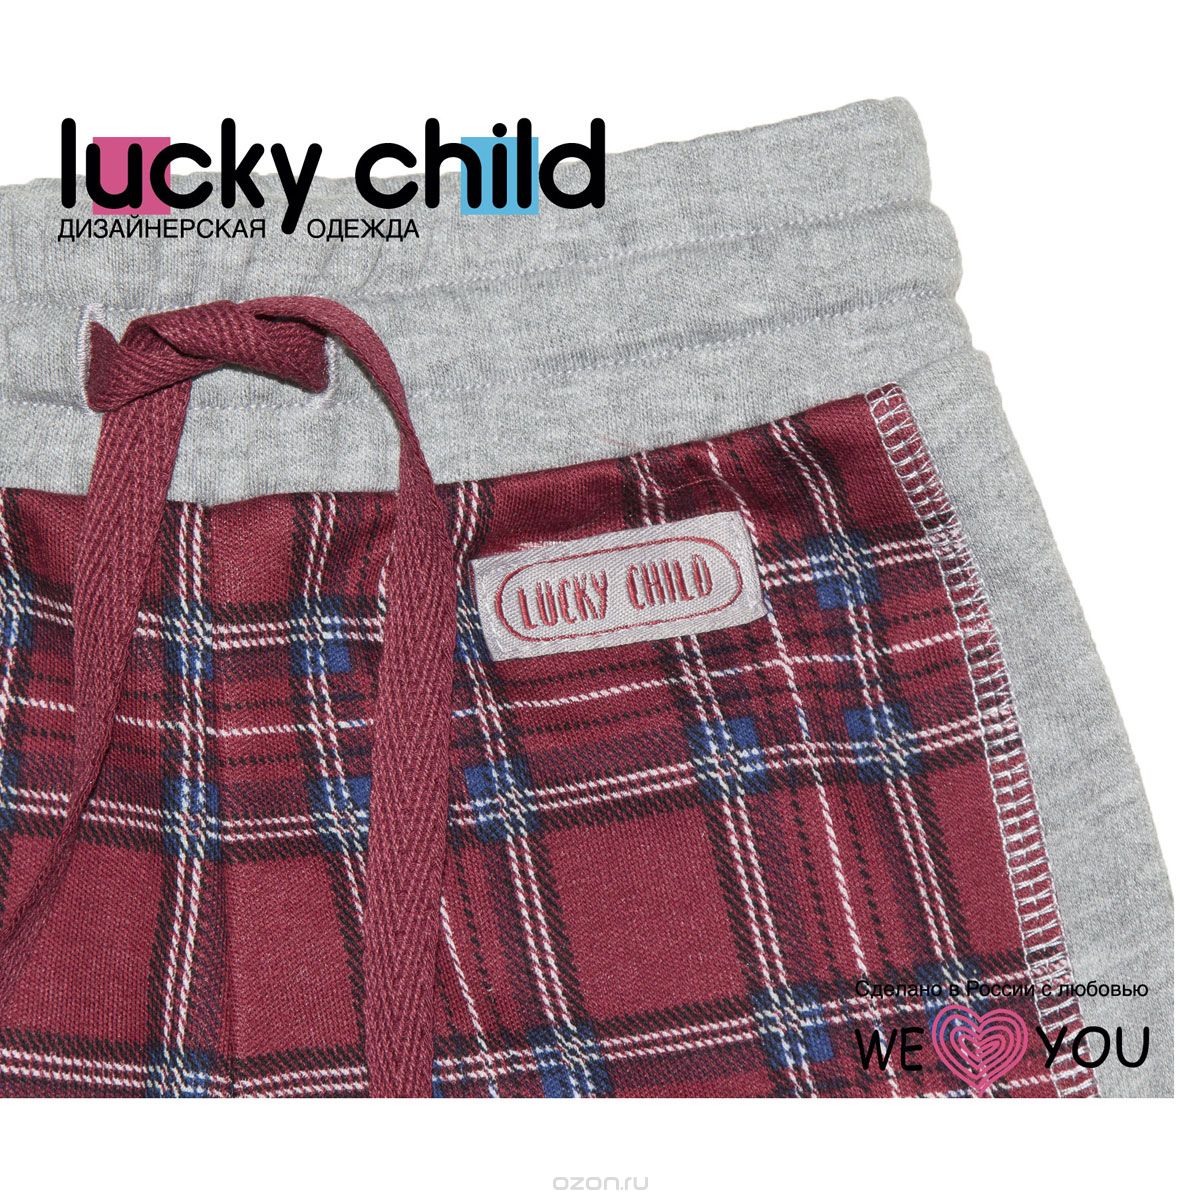    Lucky Child: , , : , . 13-410.  128/134